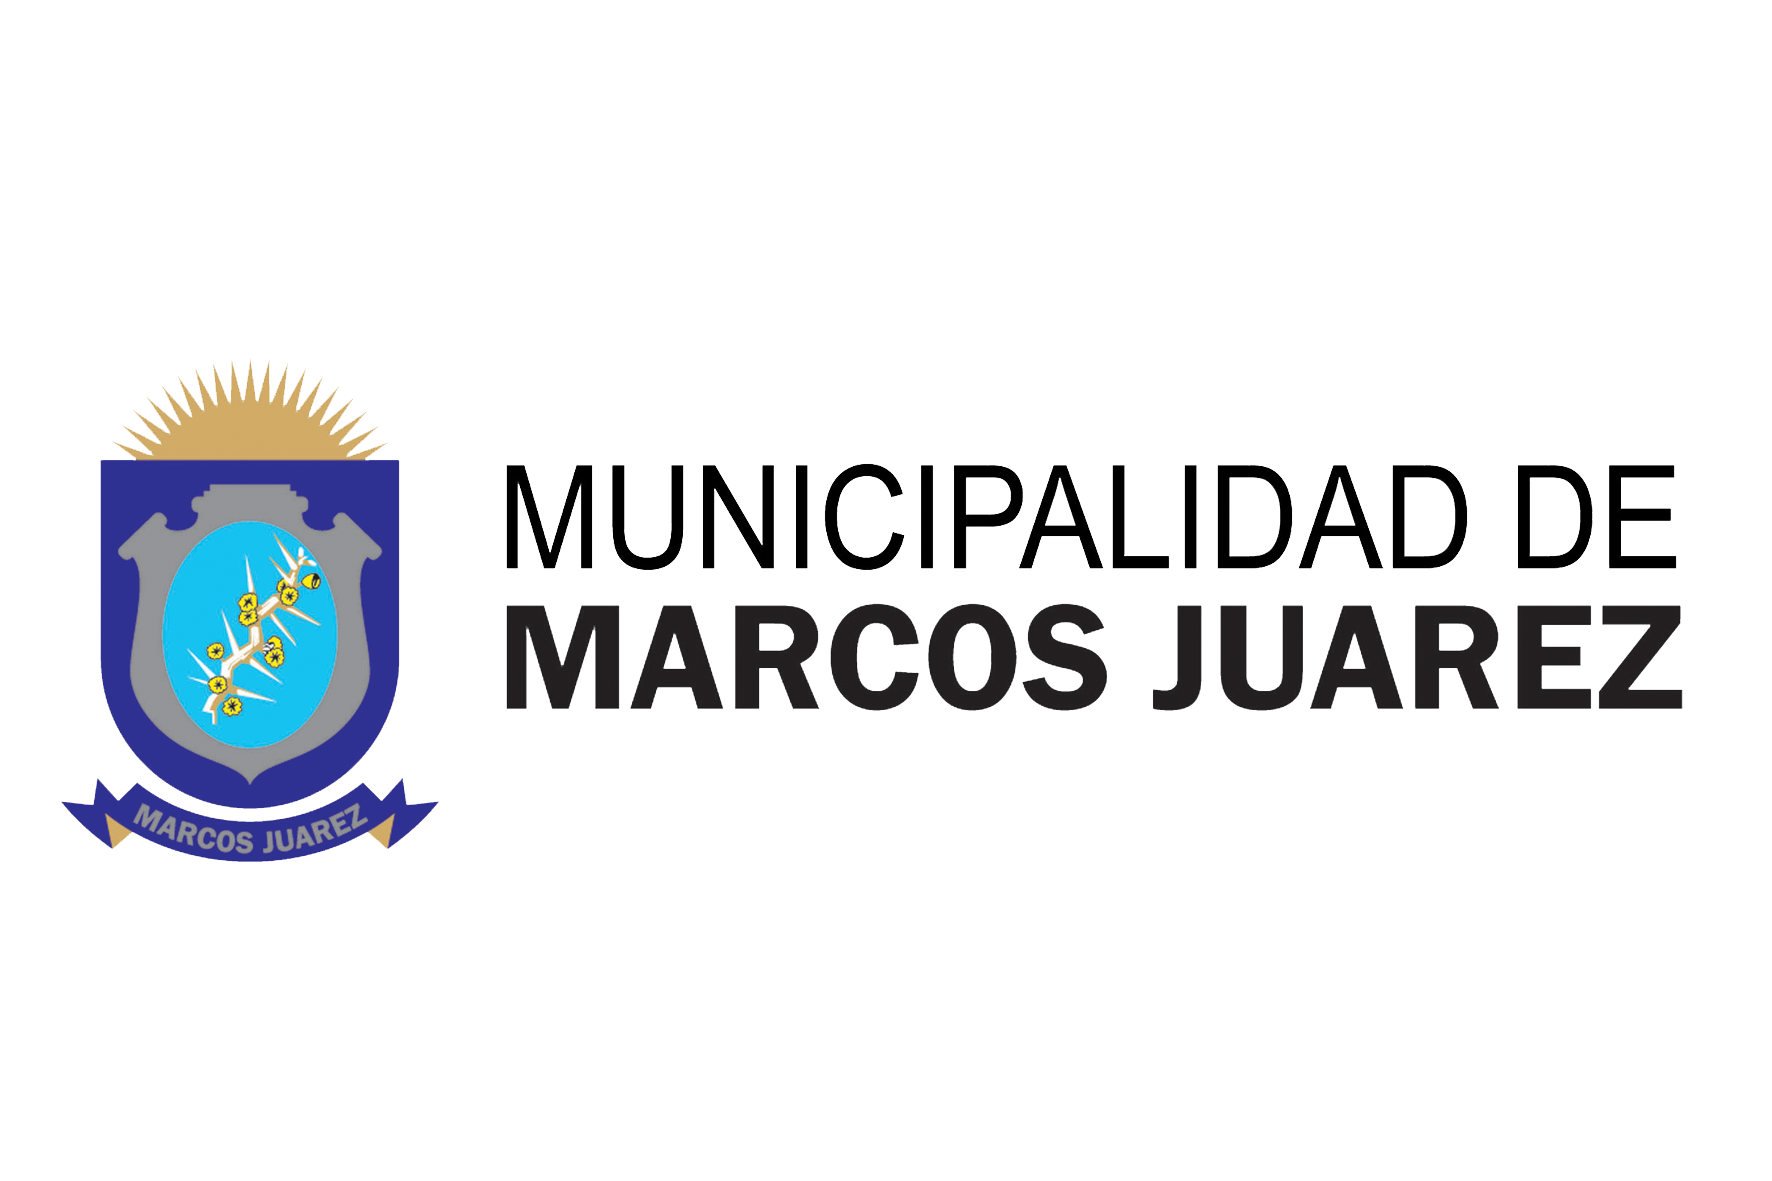 Municipalidad de Marcos Juarez